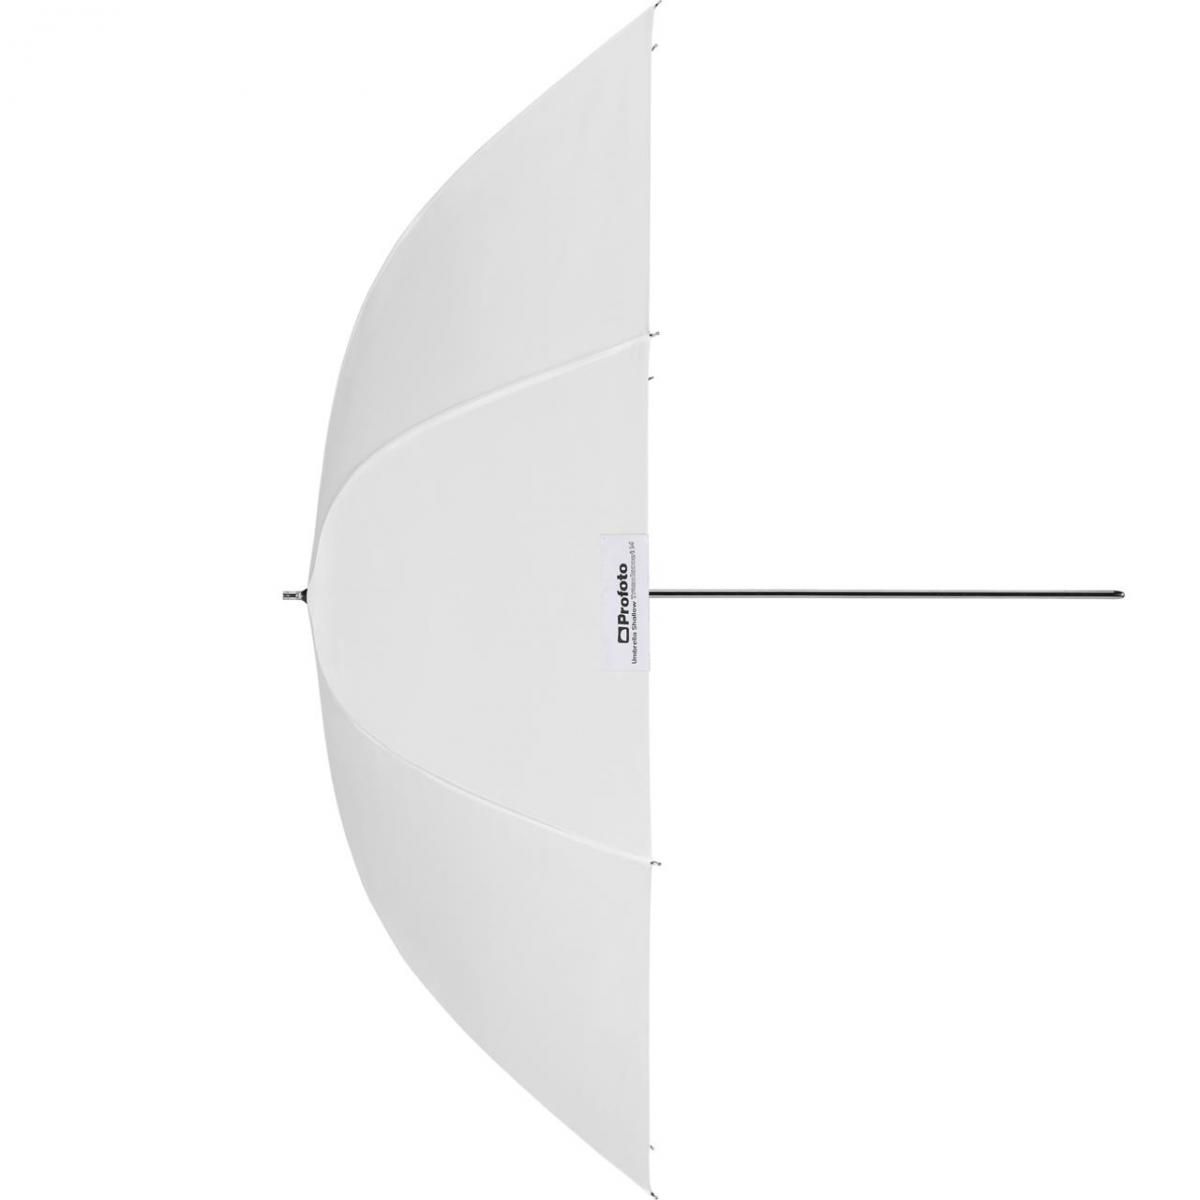 PROFOTO 100976 umbrella / flitsparaplu Shallow Translucent M (105cm/41)